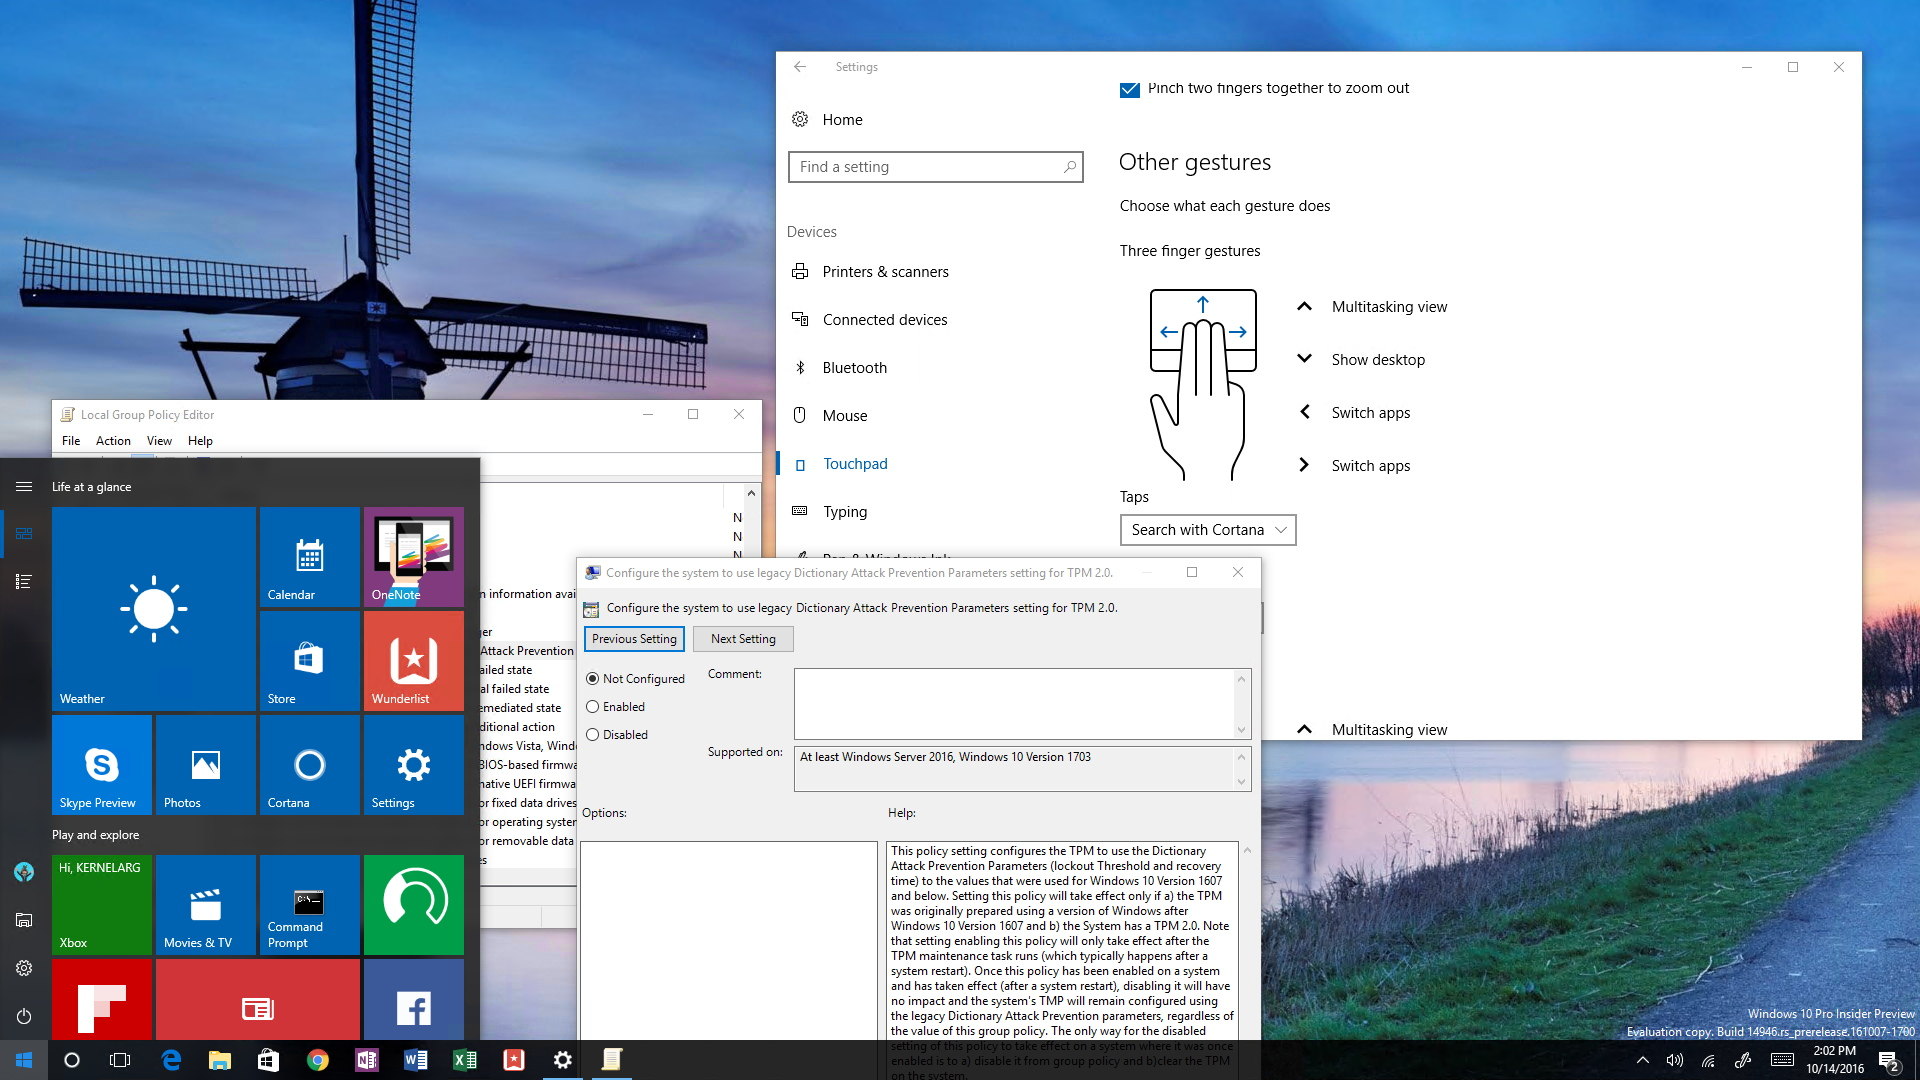 Windows 10 build 14946